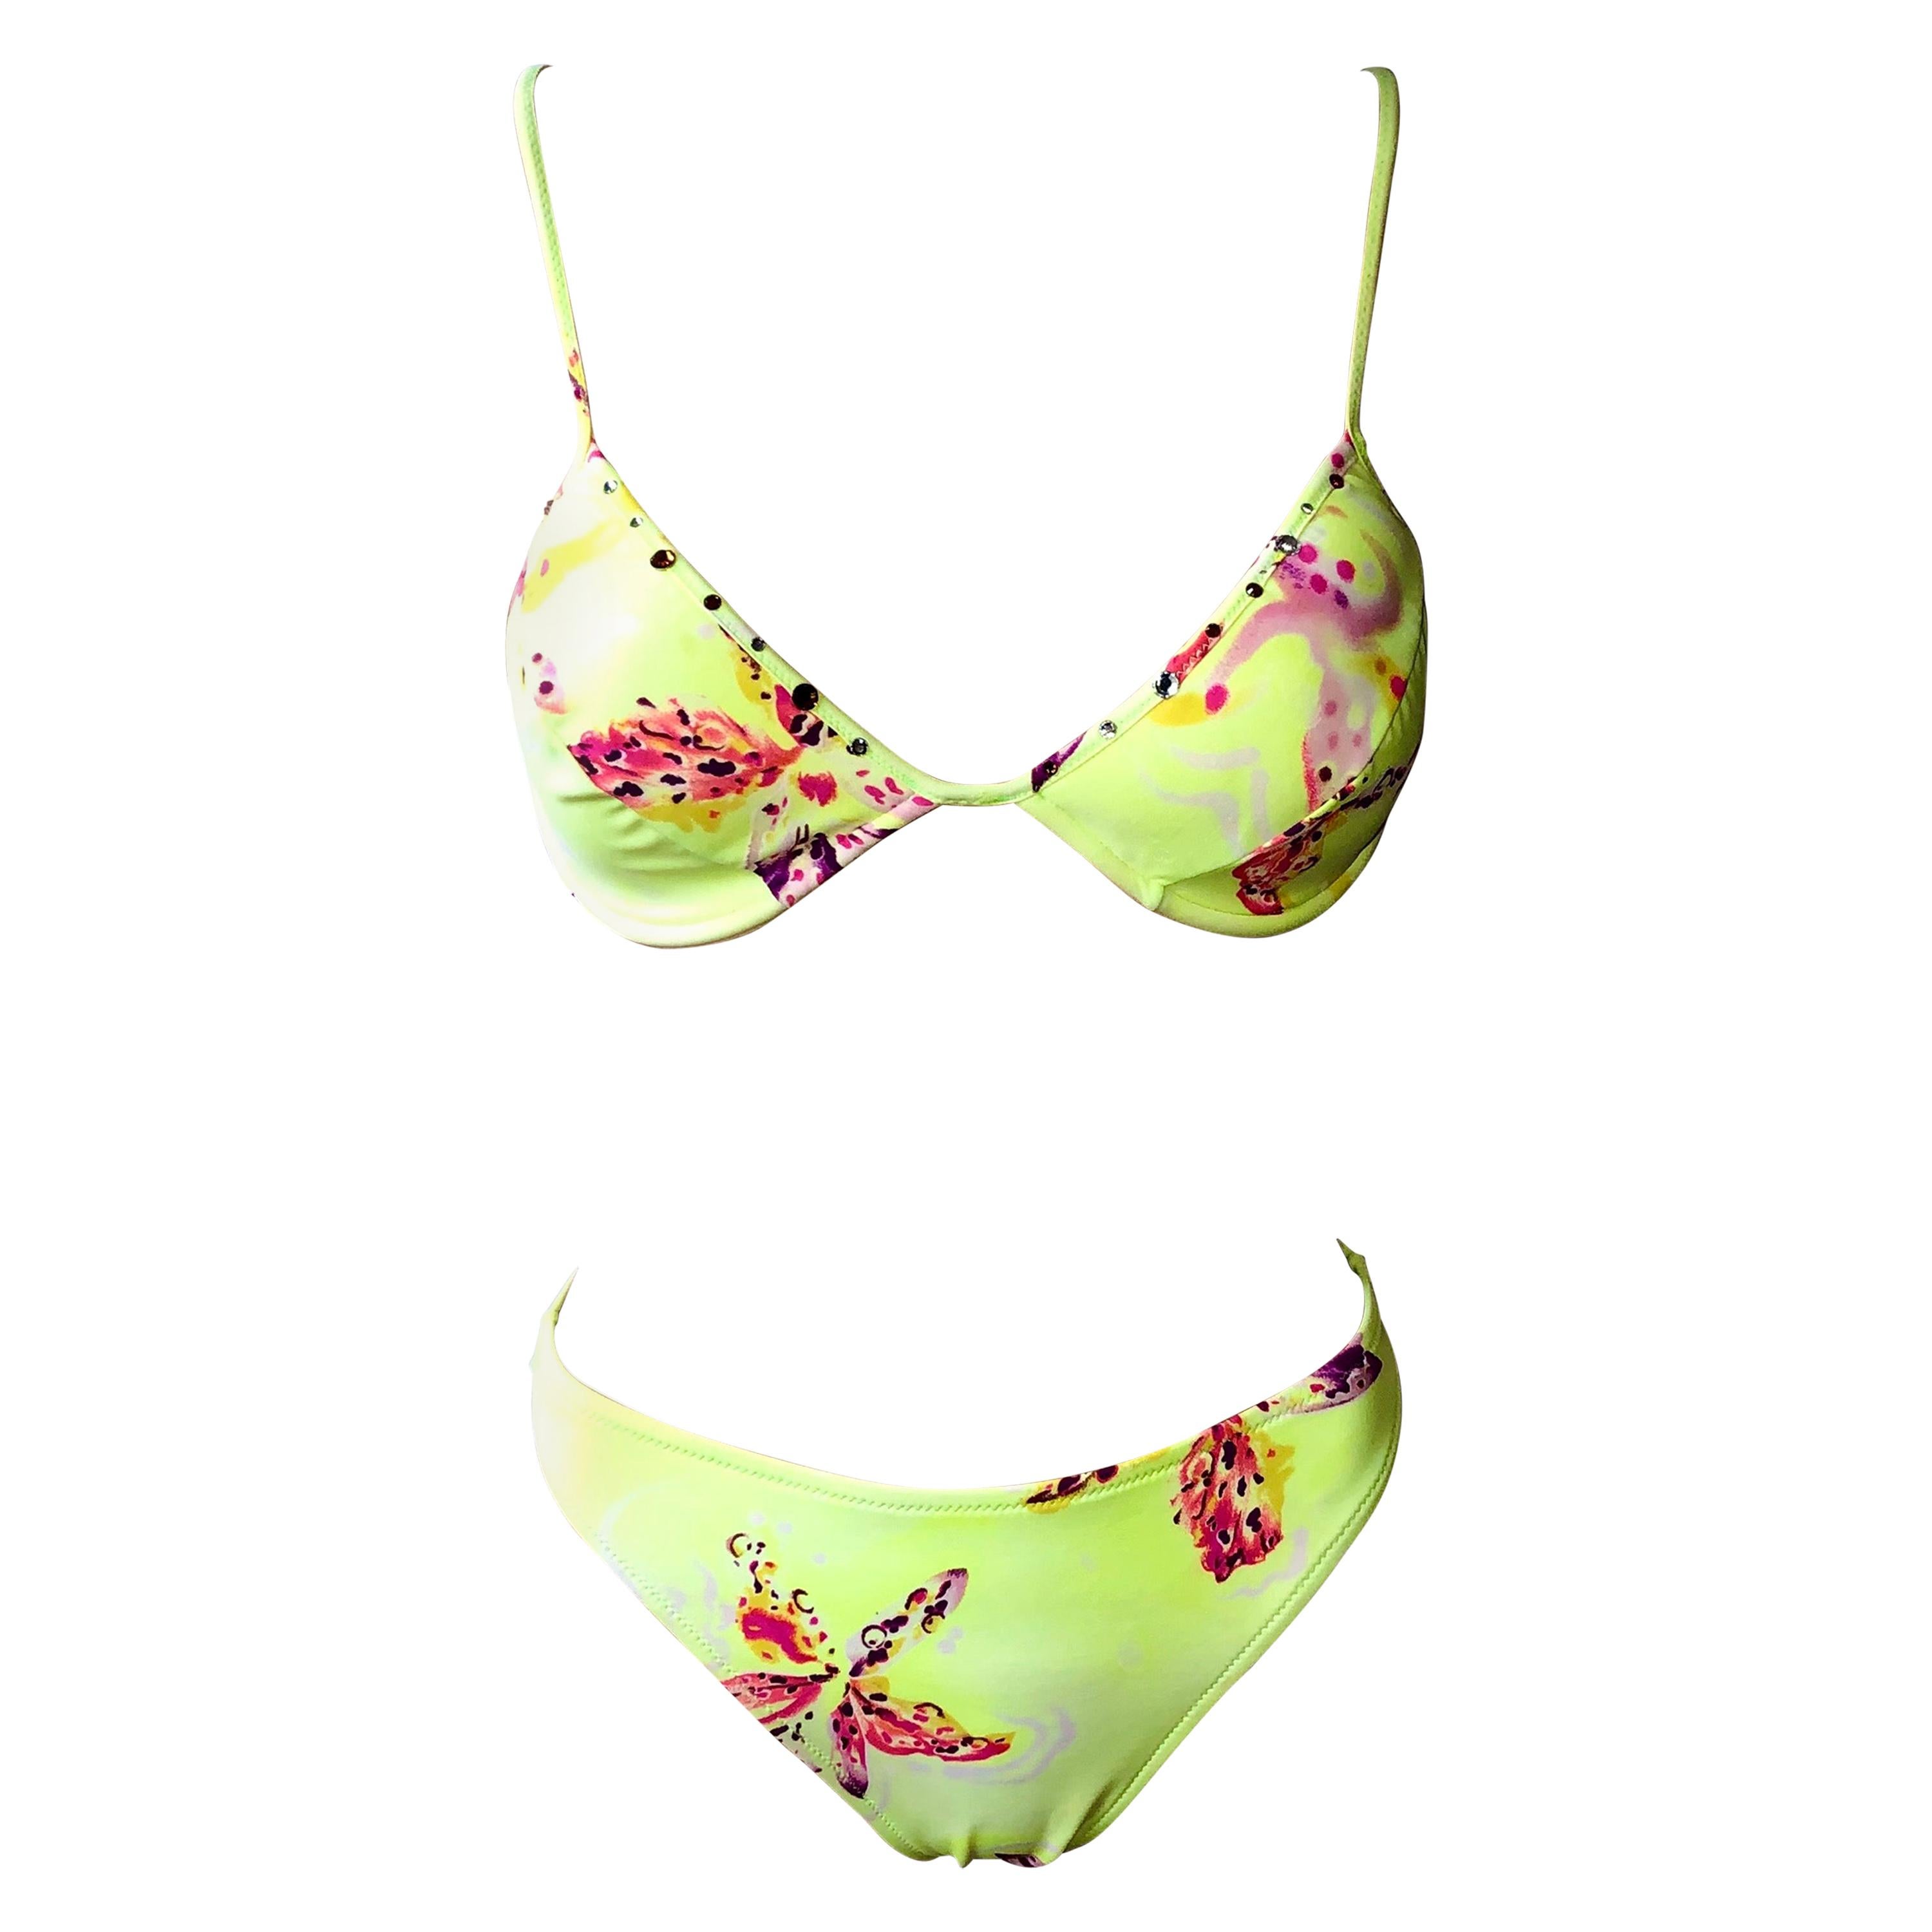 Gianni Versace S/S 2000 Orchid Neon Two-Piece Bikini Set Swimsuit Swimwear  For Sale